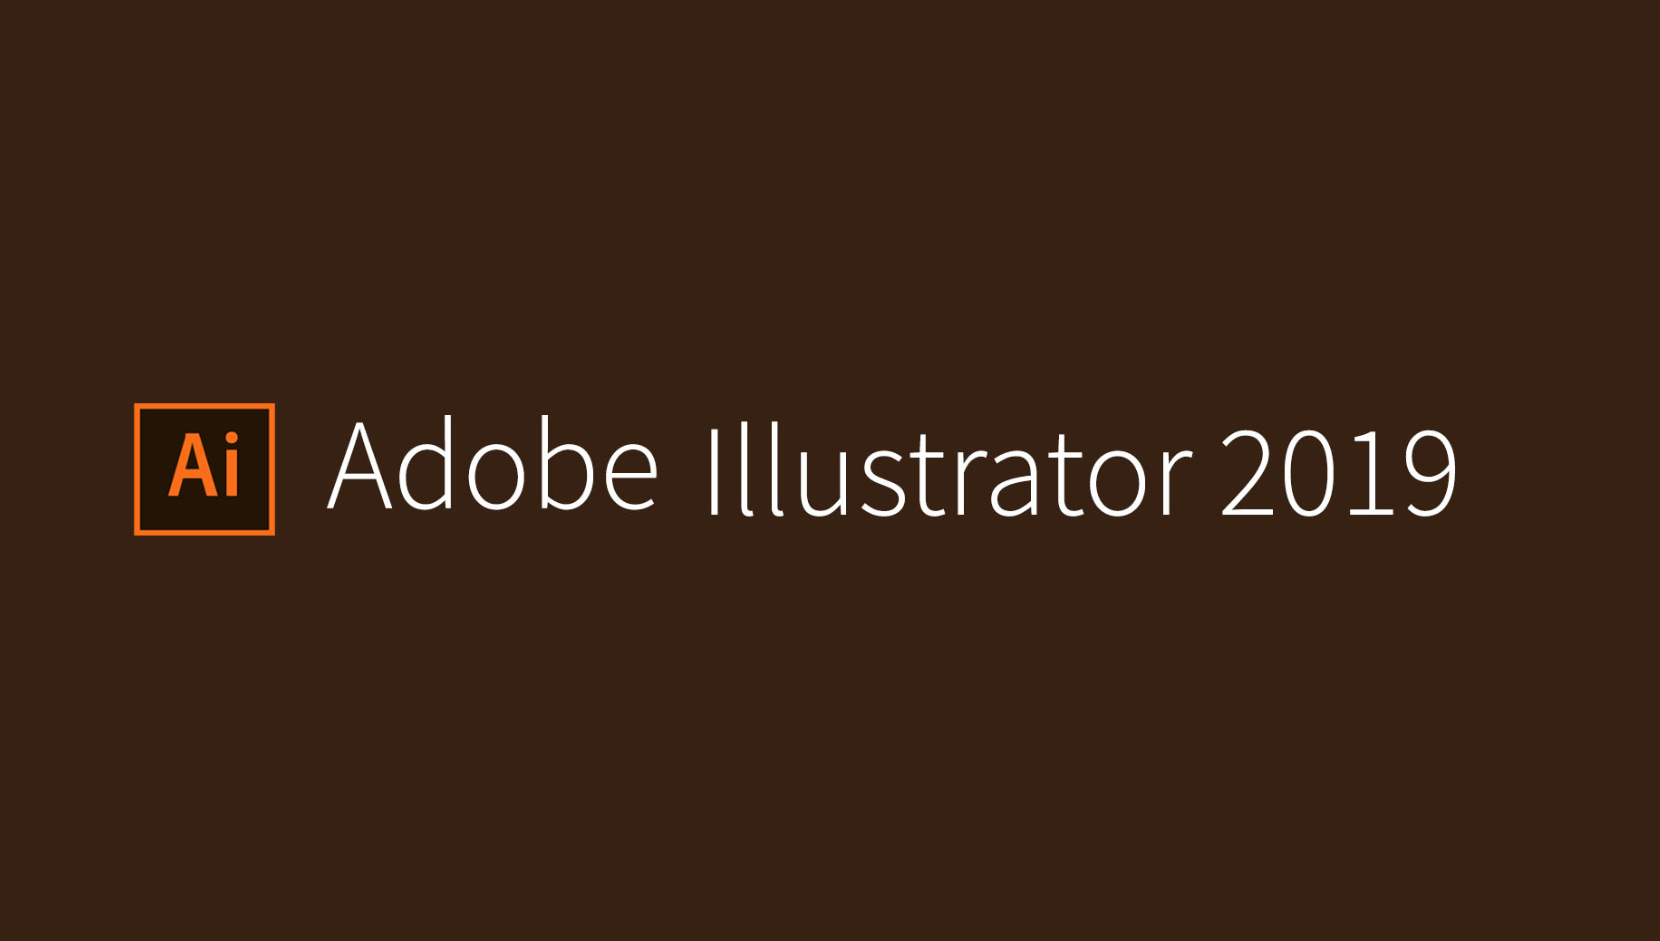 Adobe Illustrator CC 2019 Full Crack, link download google drive tốc độ cao